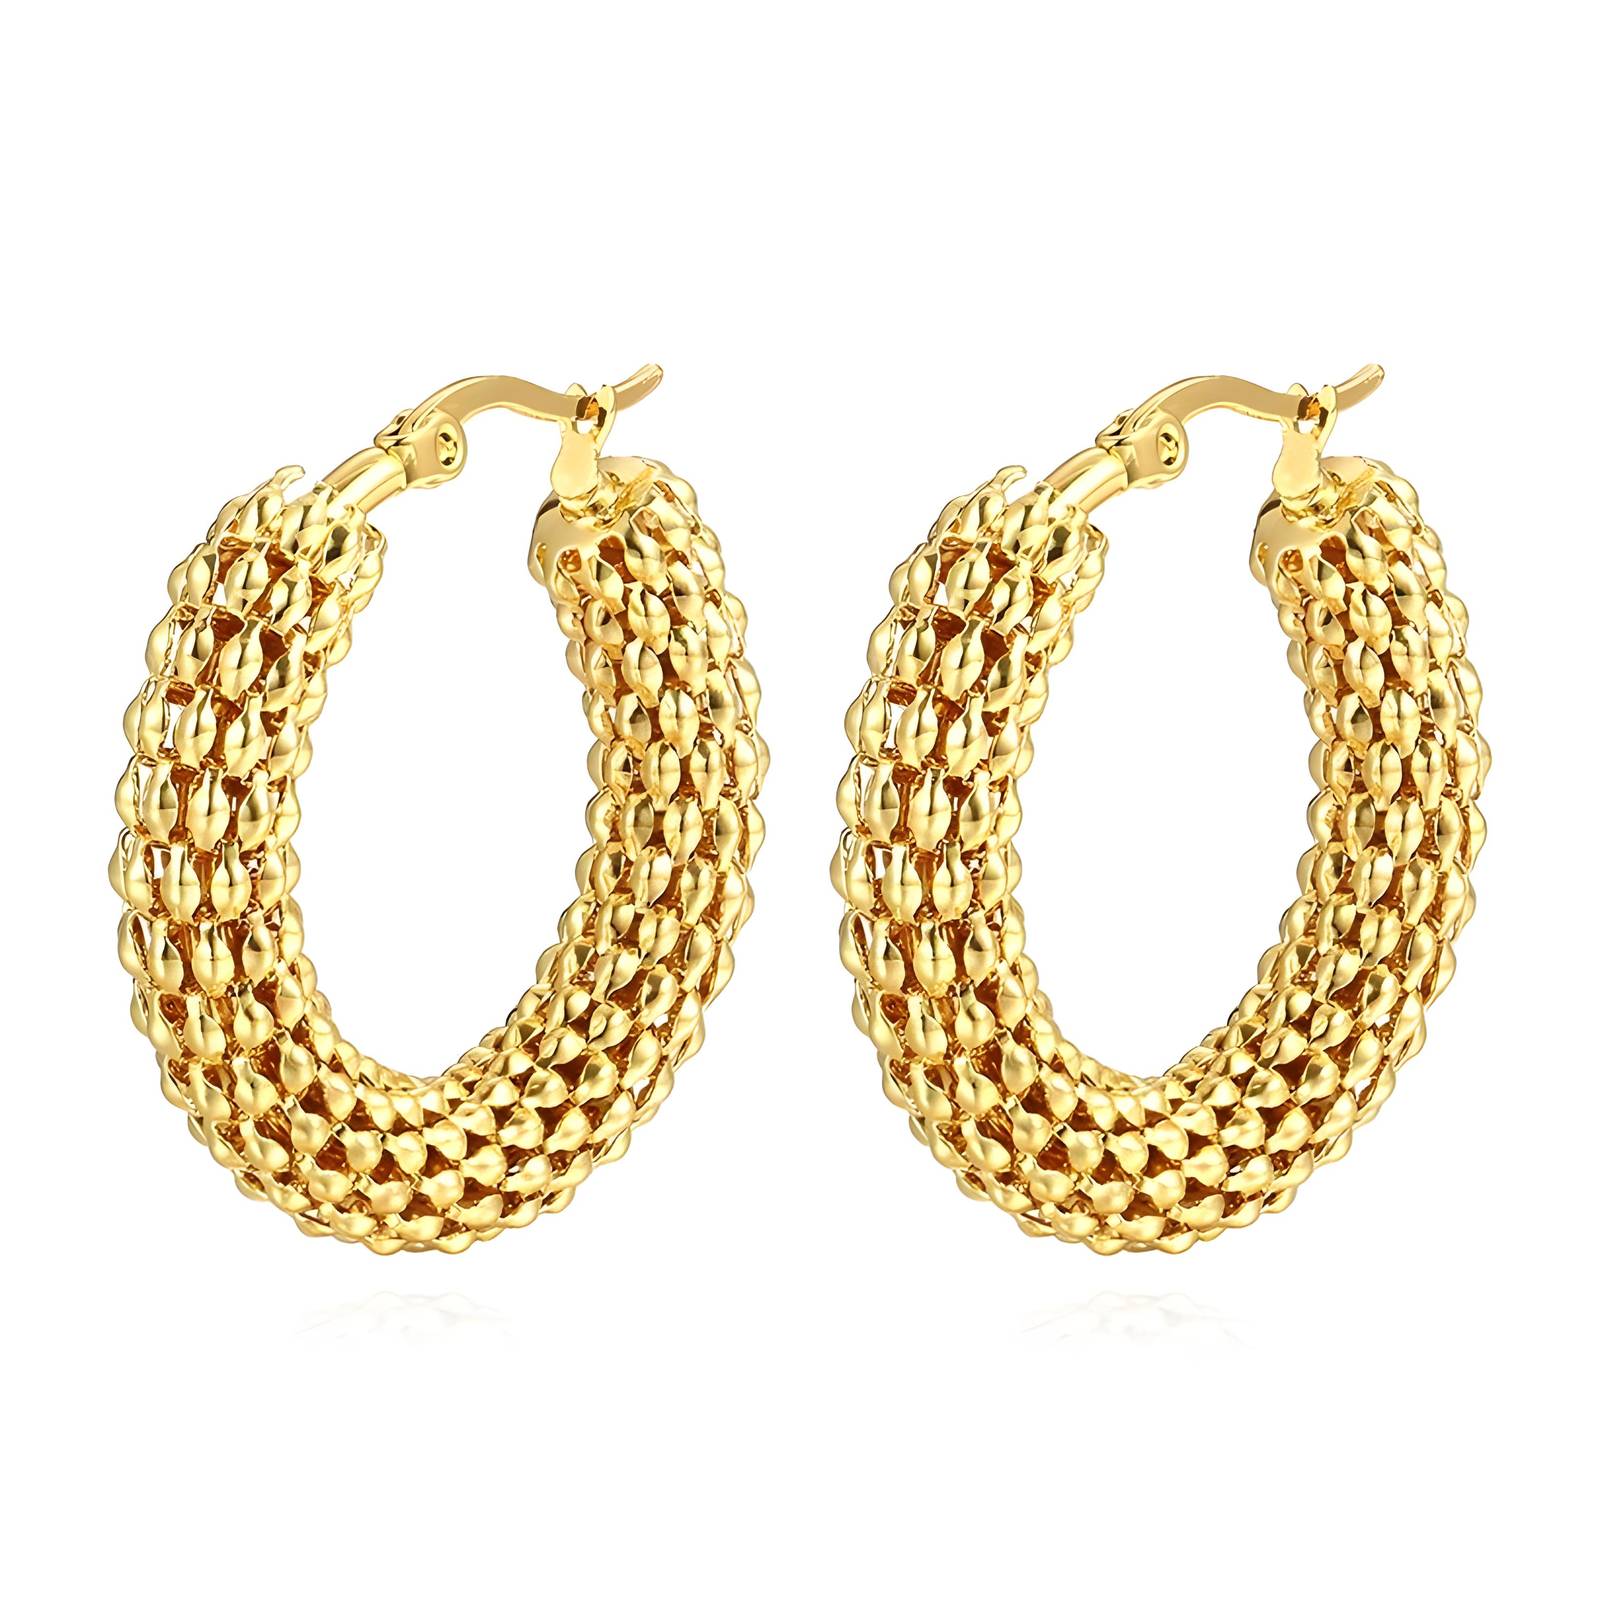 18K gold plated Stainless steel earrings, Intensity SKU #87250-0 ...